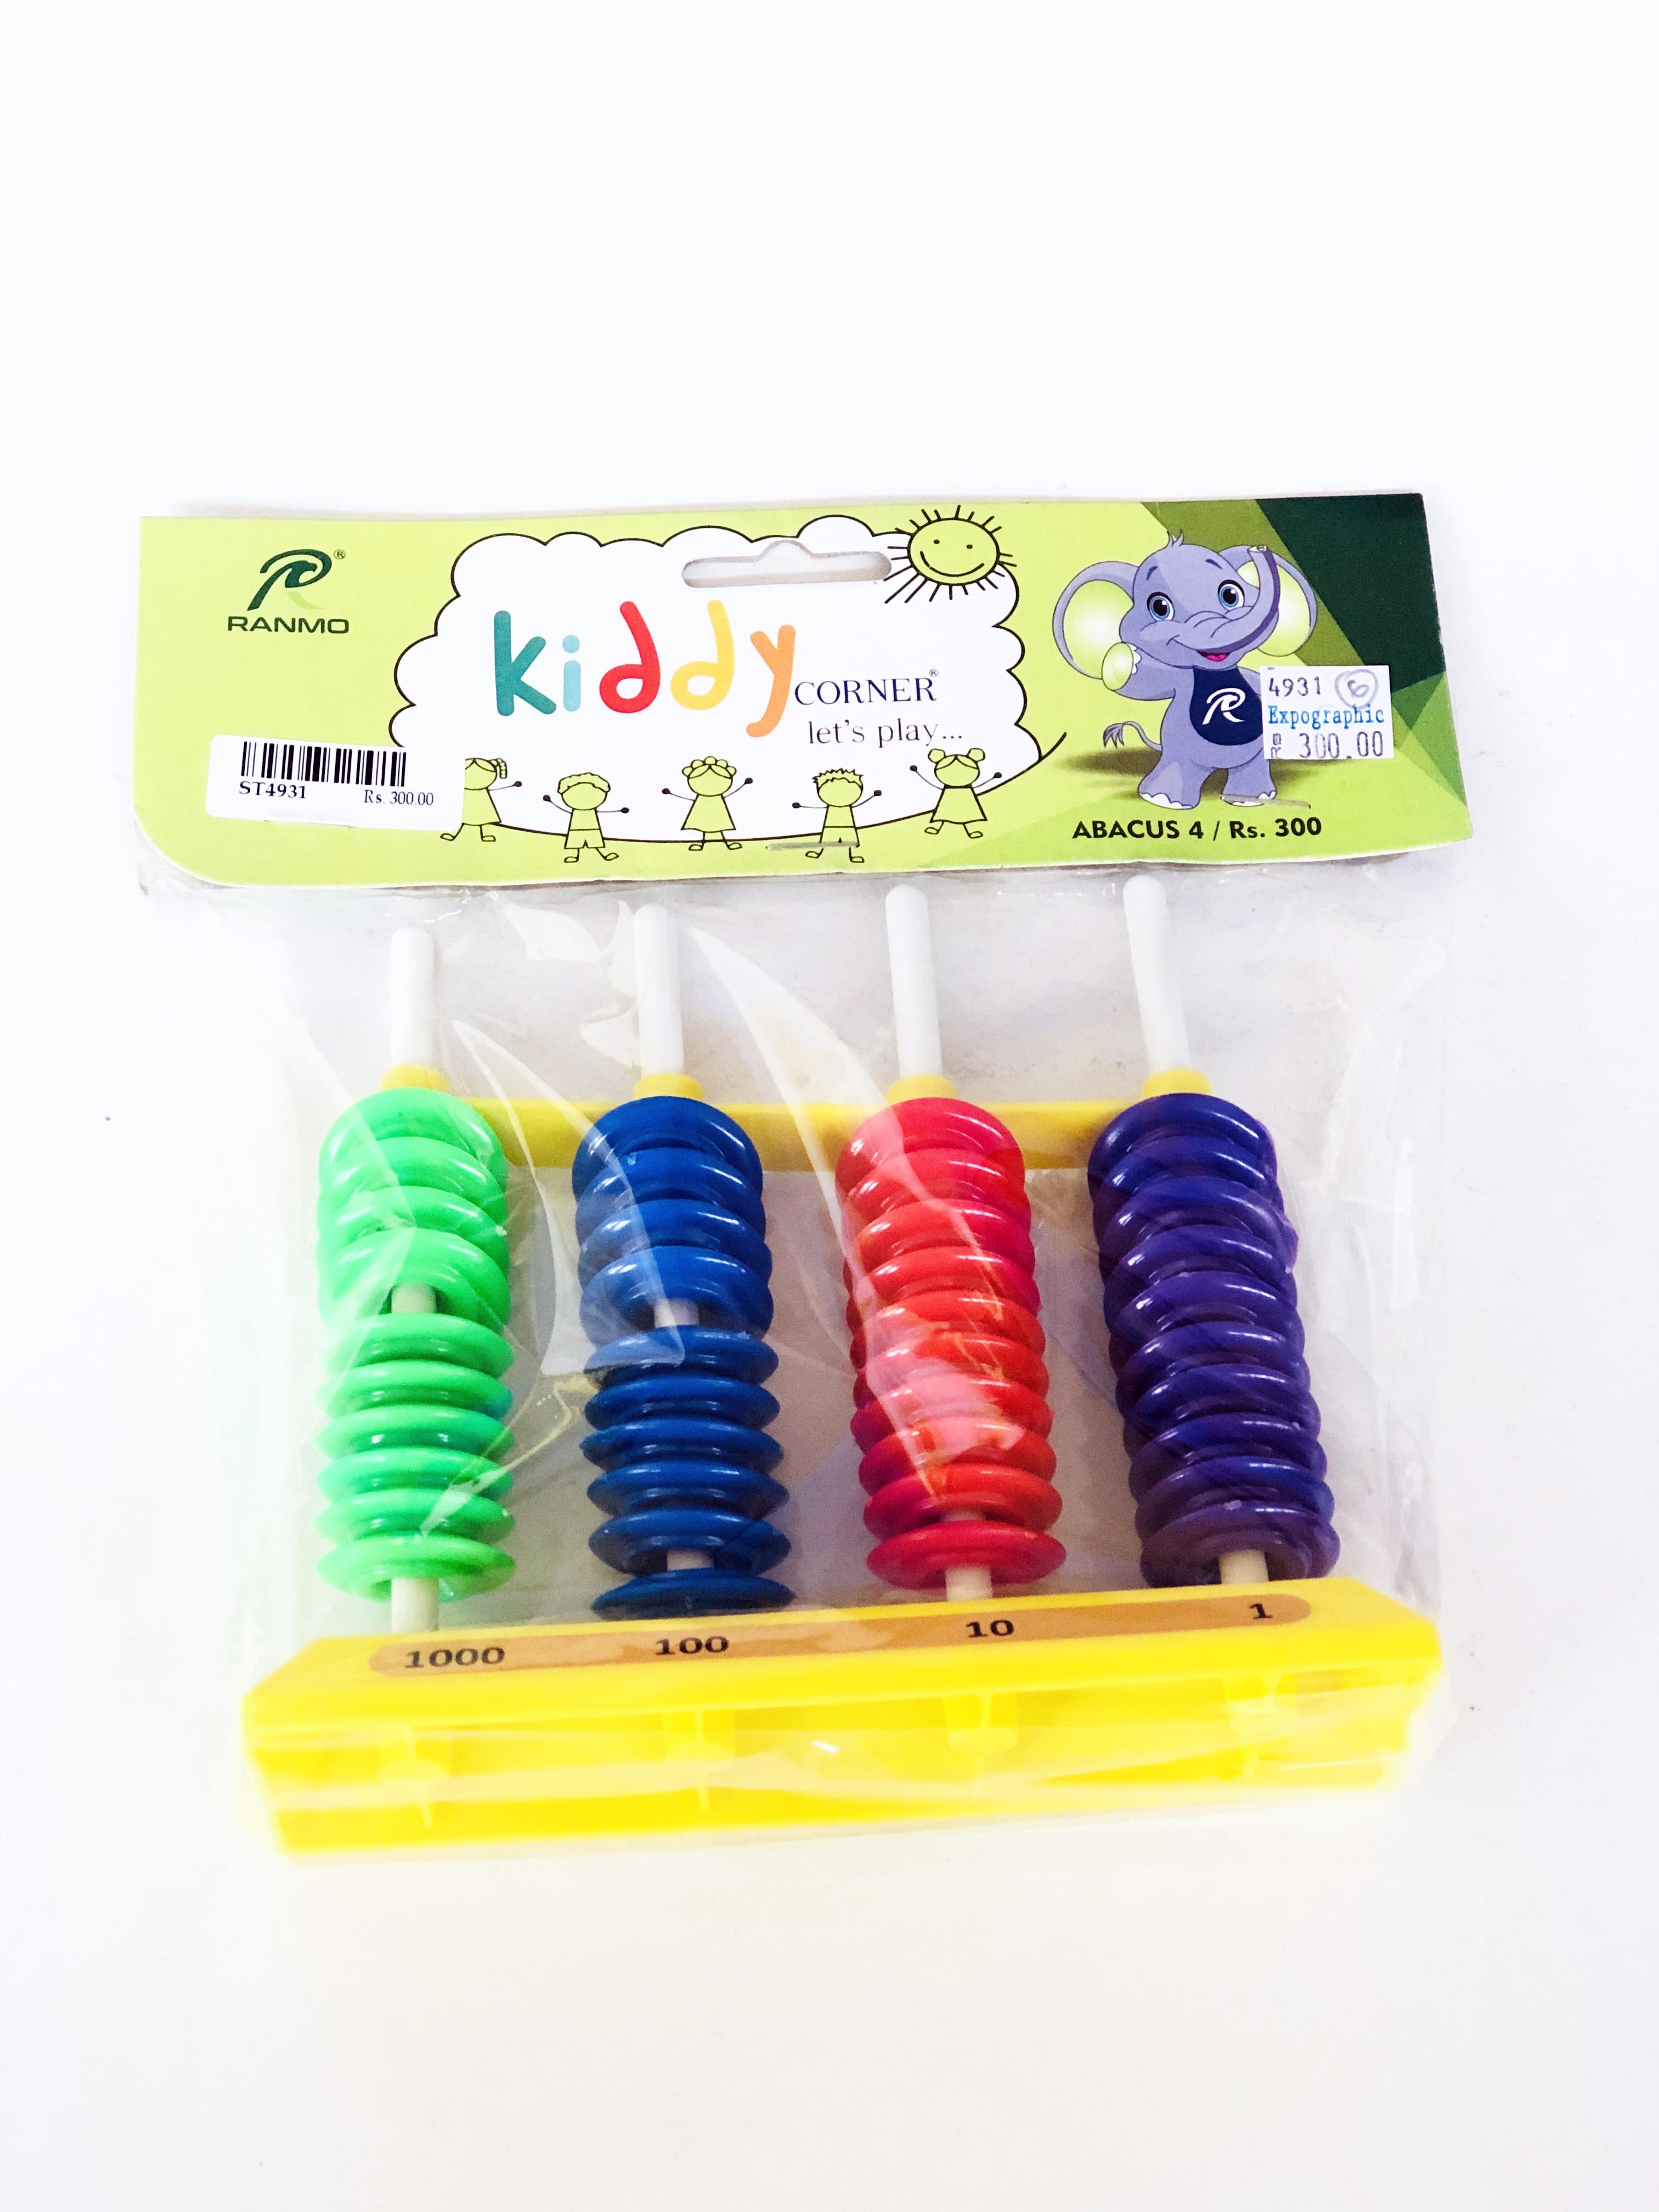 Ranmo Kiddy Corner Abacus 4